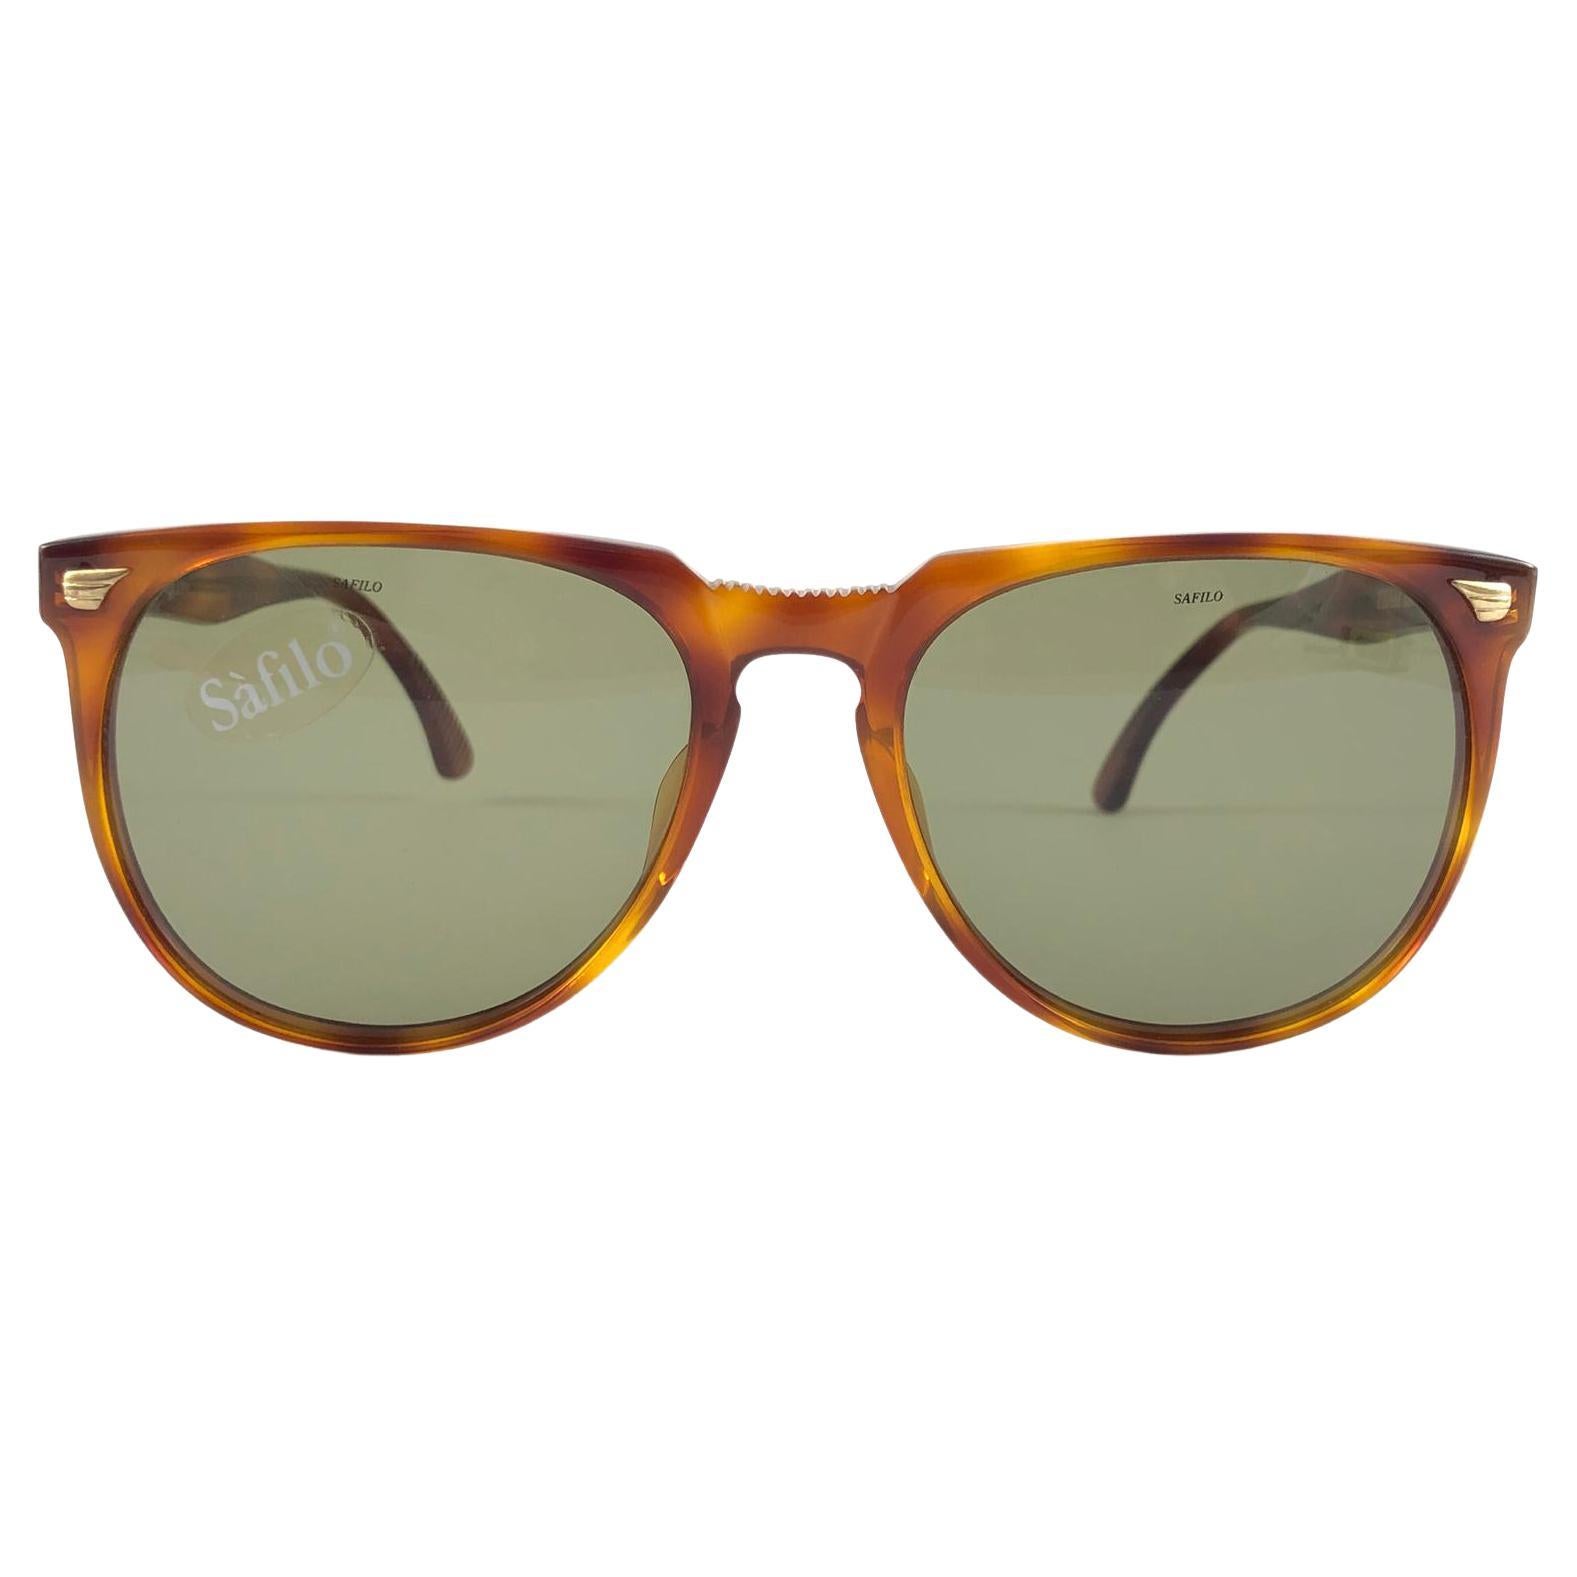 New Vintage Safilo Team 429 Tortoise Frame Made in Italy 1980's Sunglasses